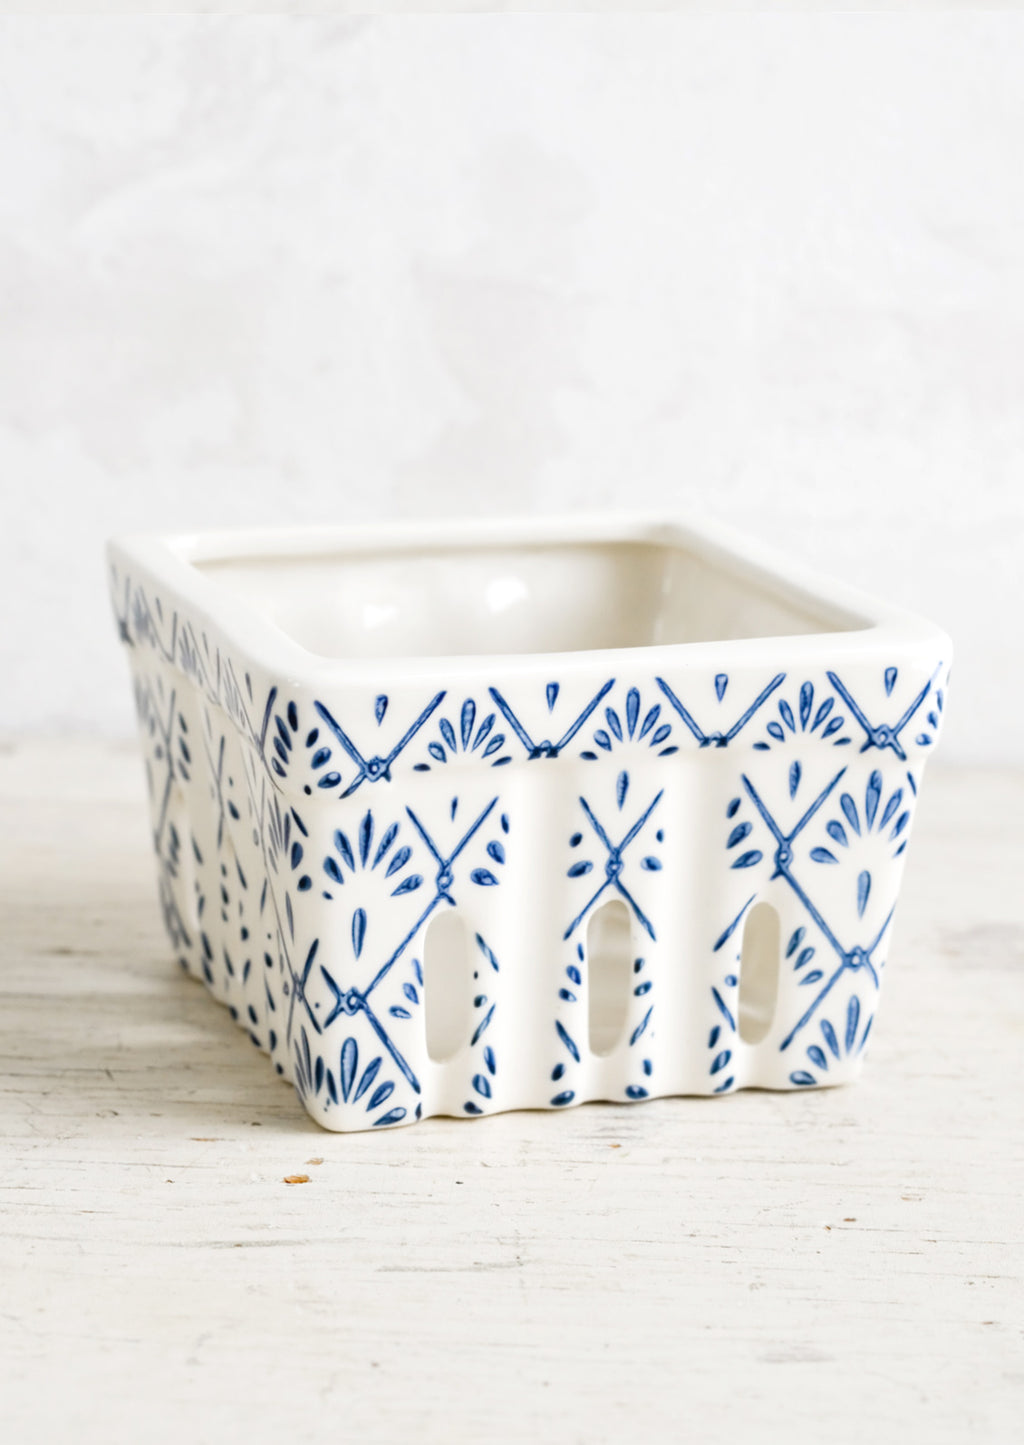 Blue Tilework: A ceramic berry basket with blue tilework print on white ceramic.